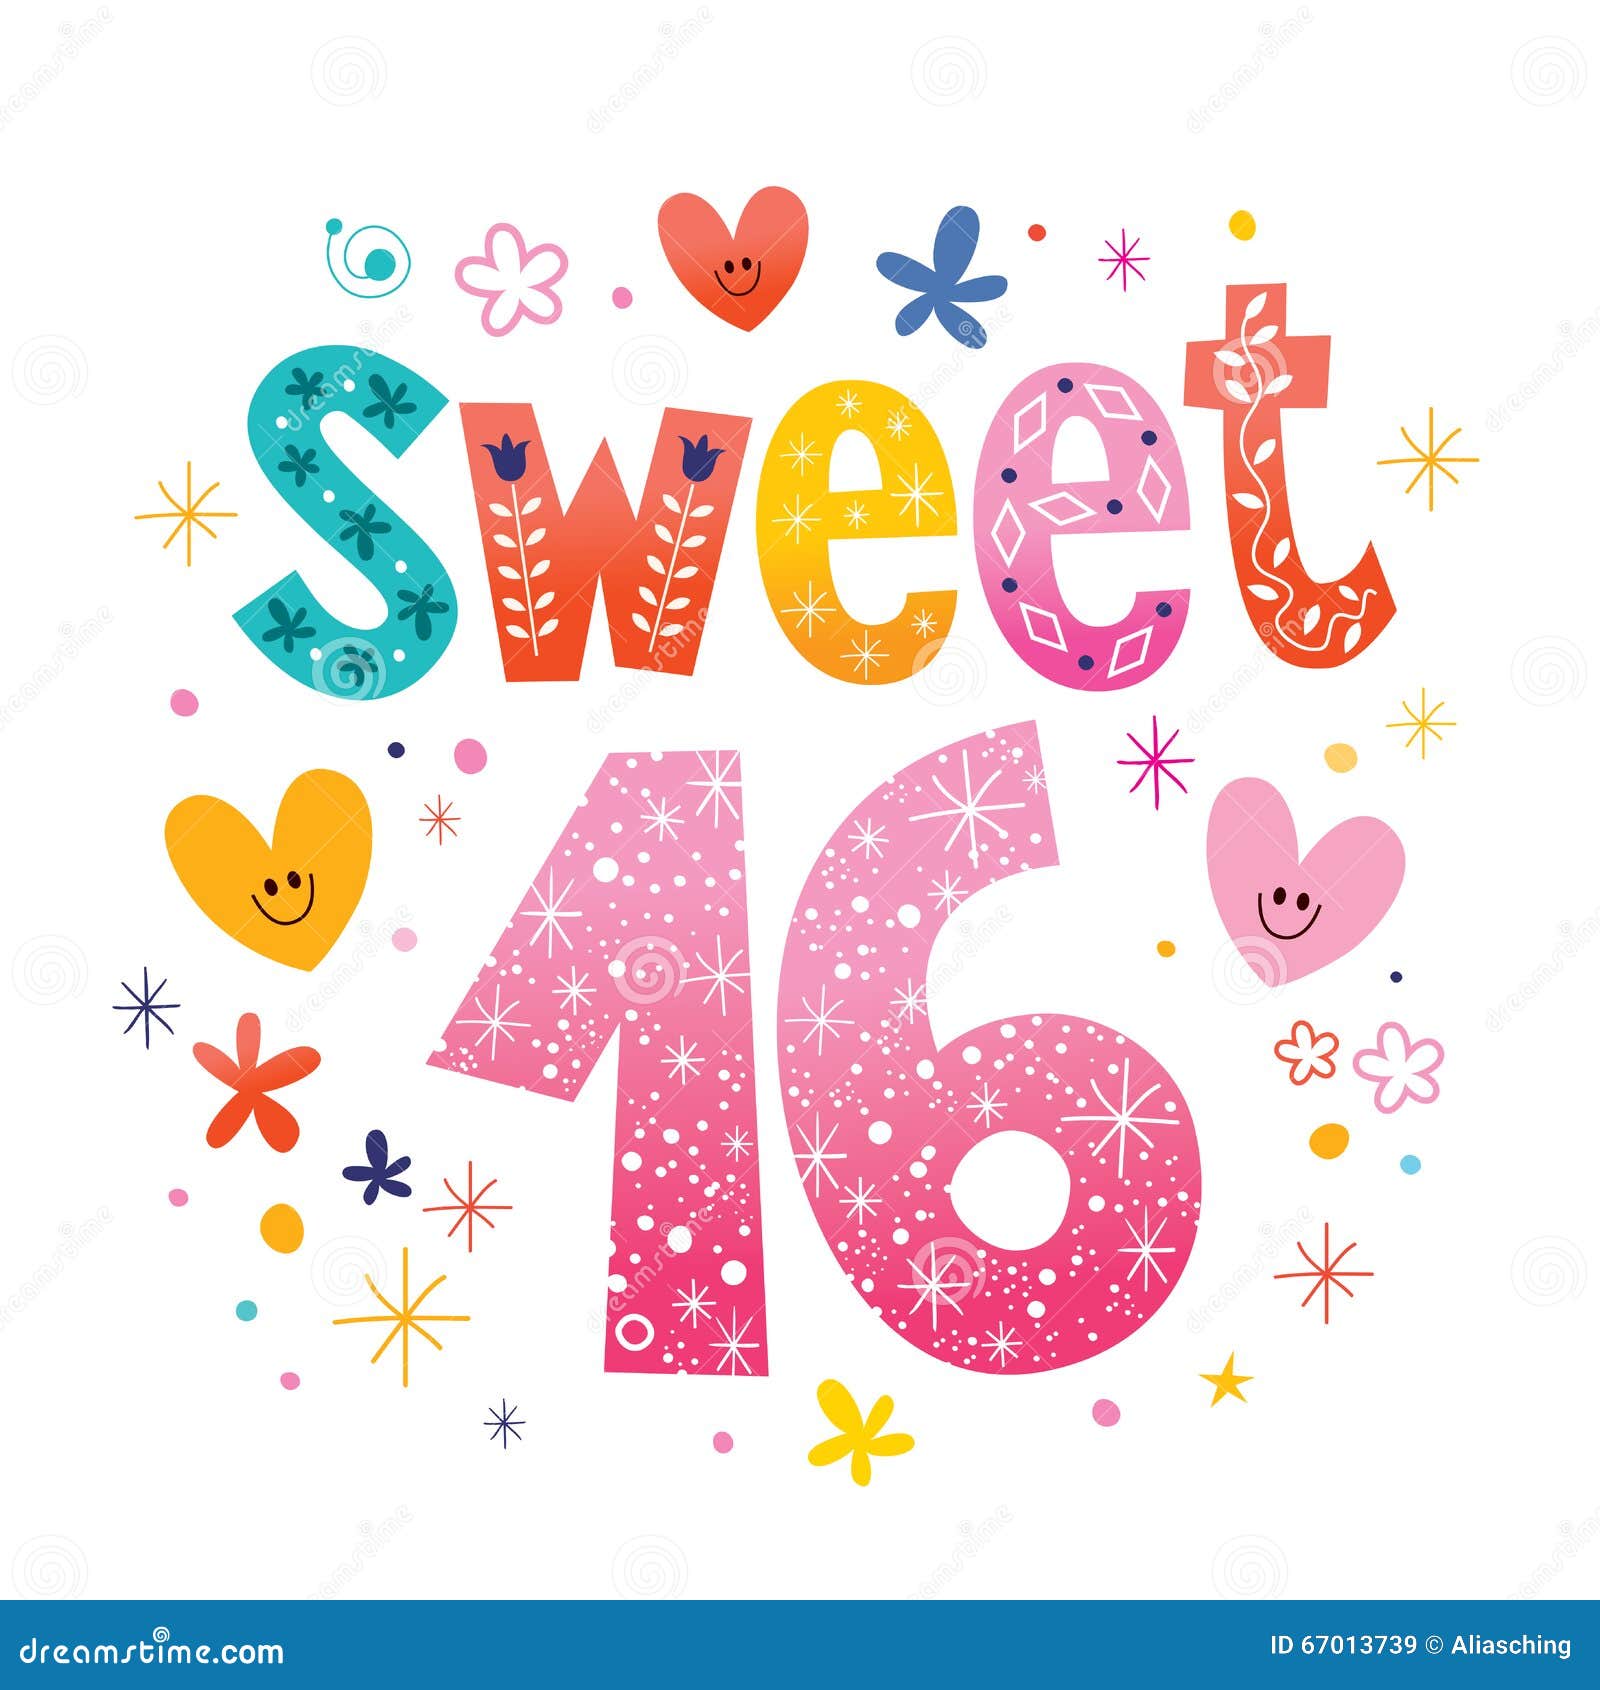 Sweet sixteen 1.3 free download